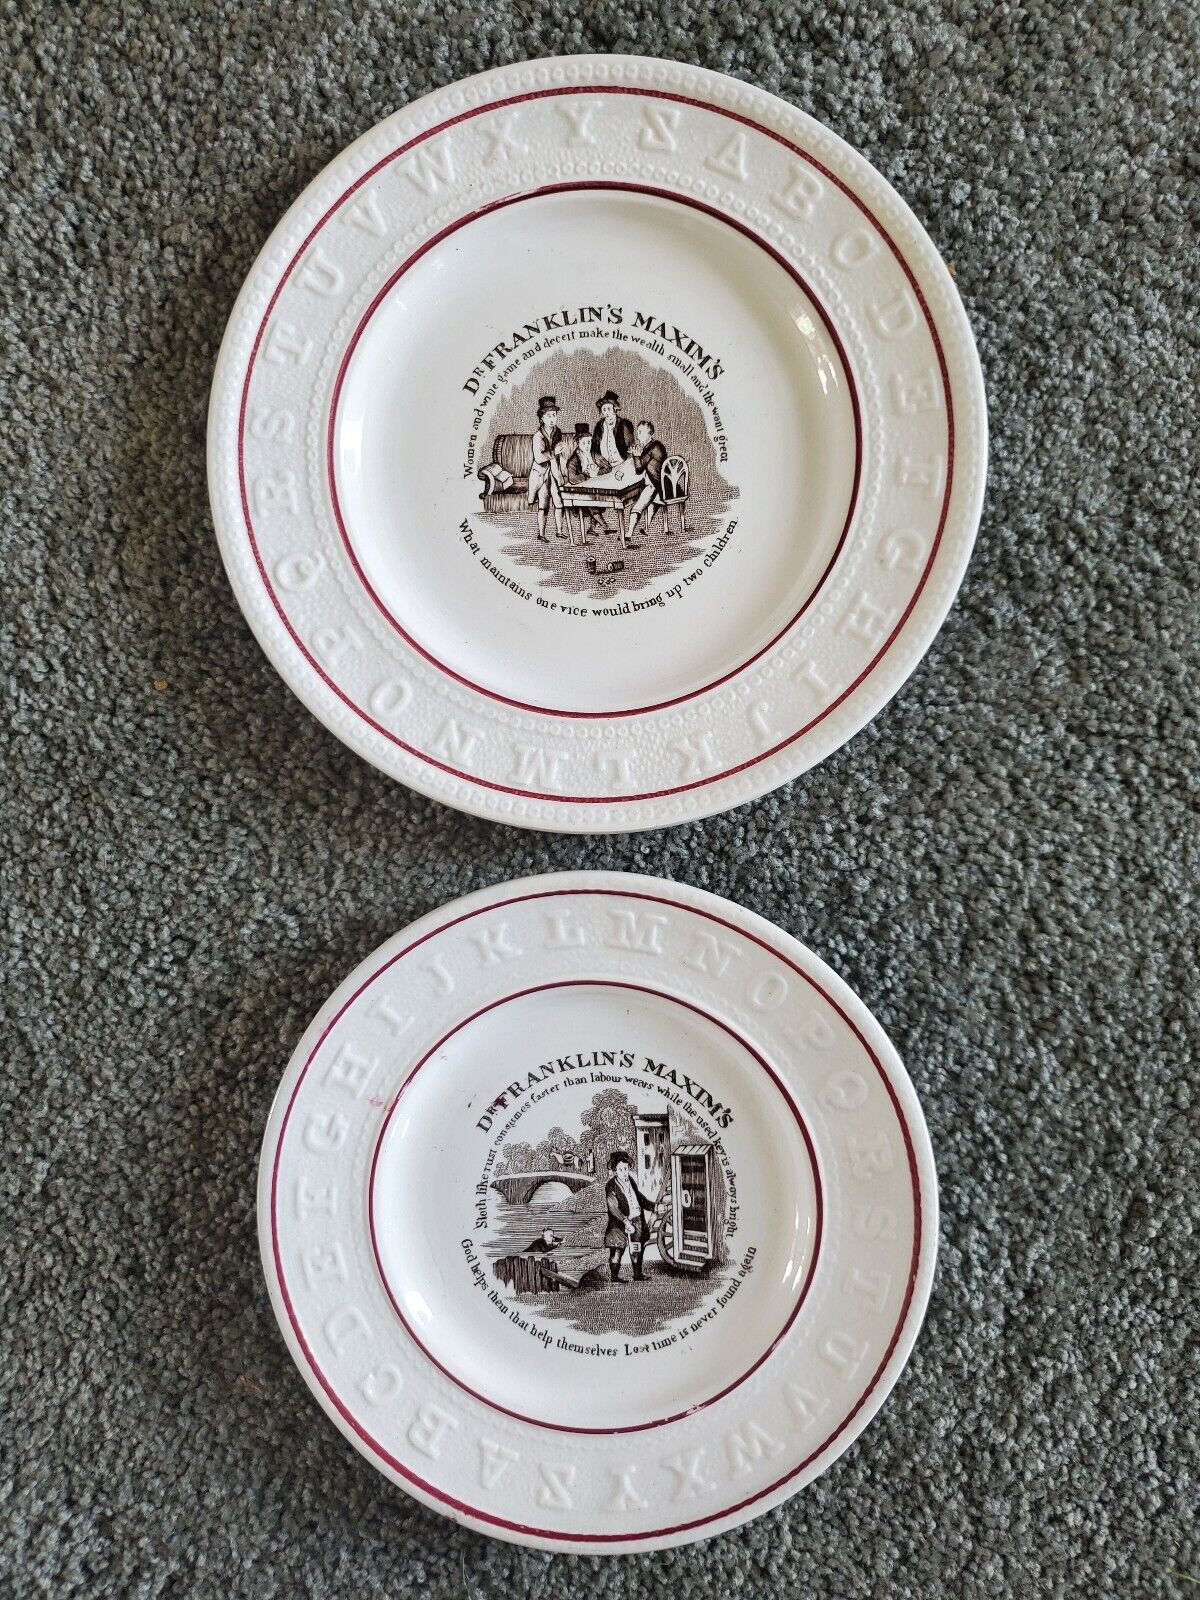 Antique Dr. Franklin's Maxim's ABC Collector's Plates